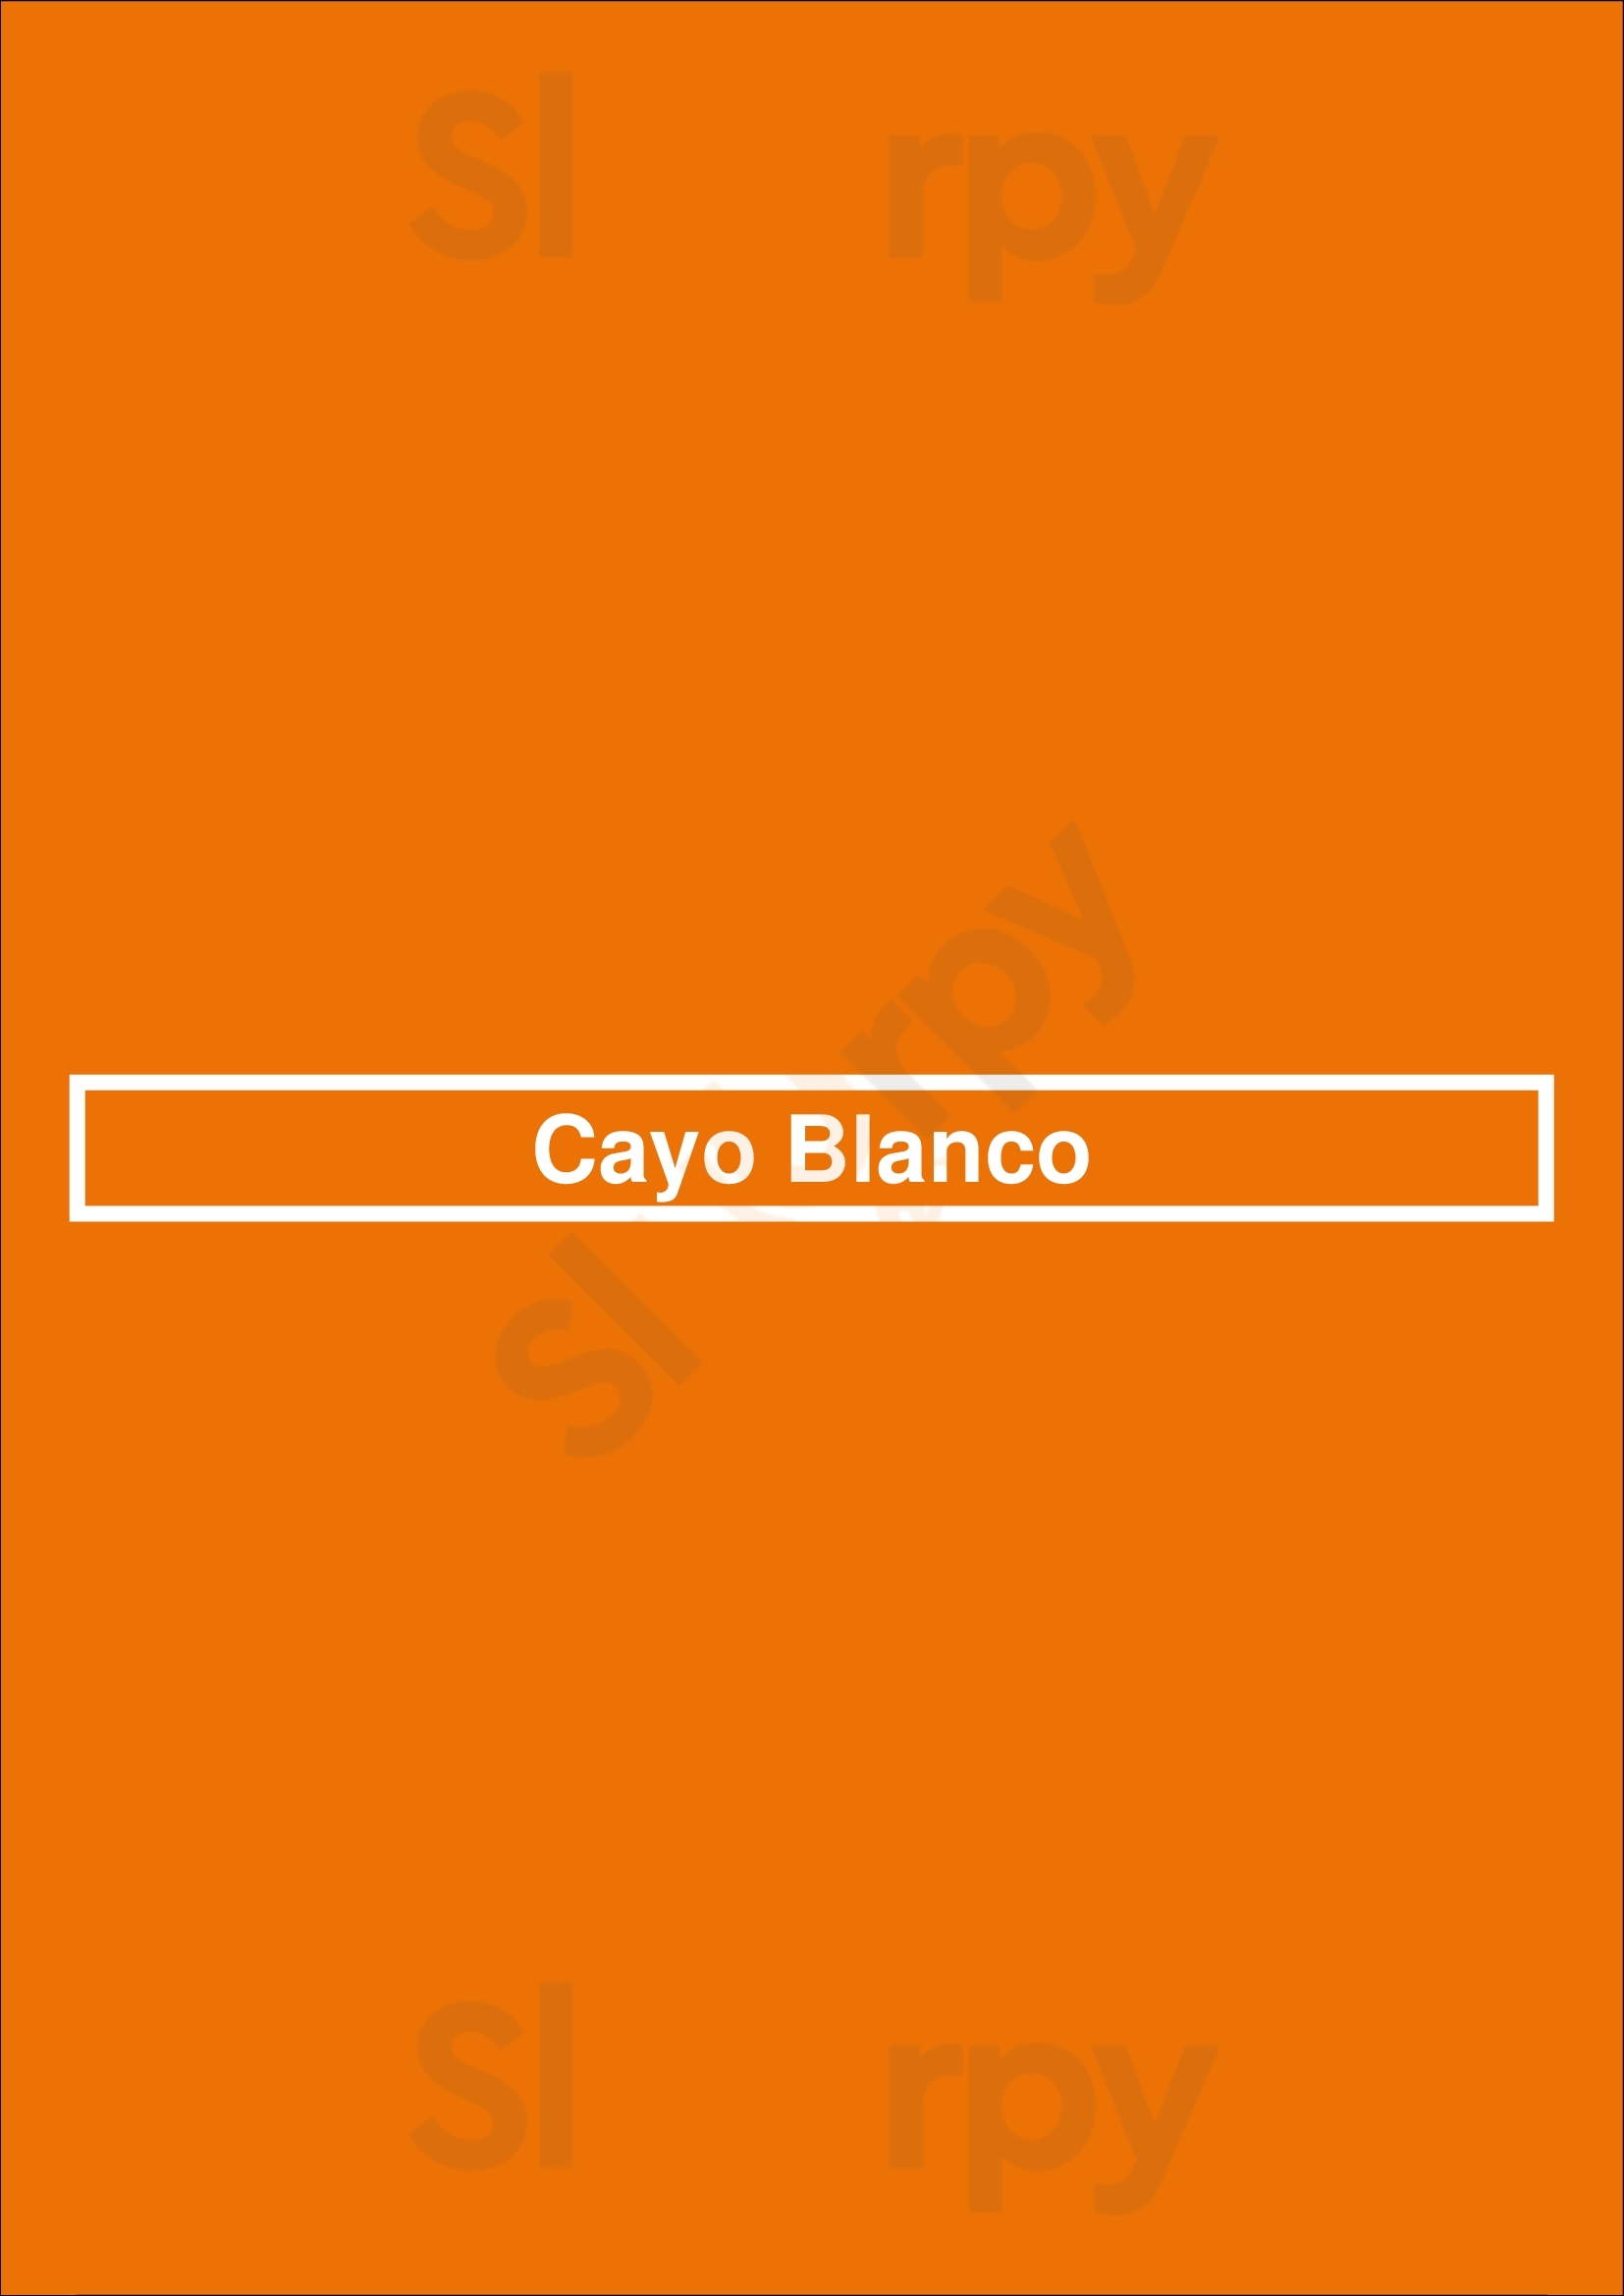 Cayo Blanco San Juan Menu - 1